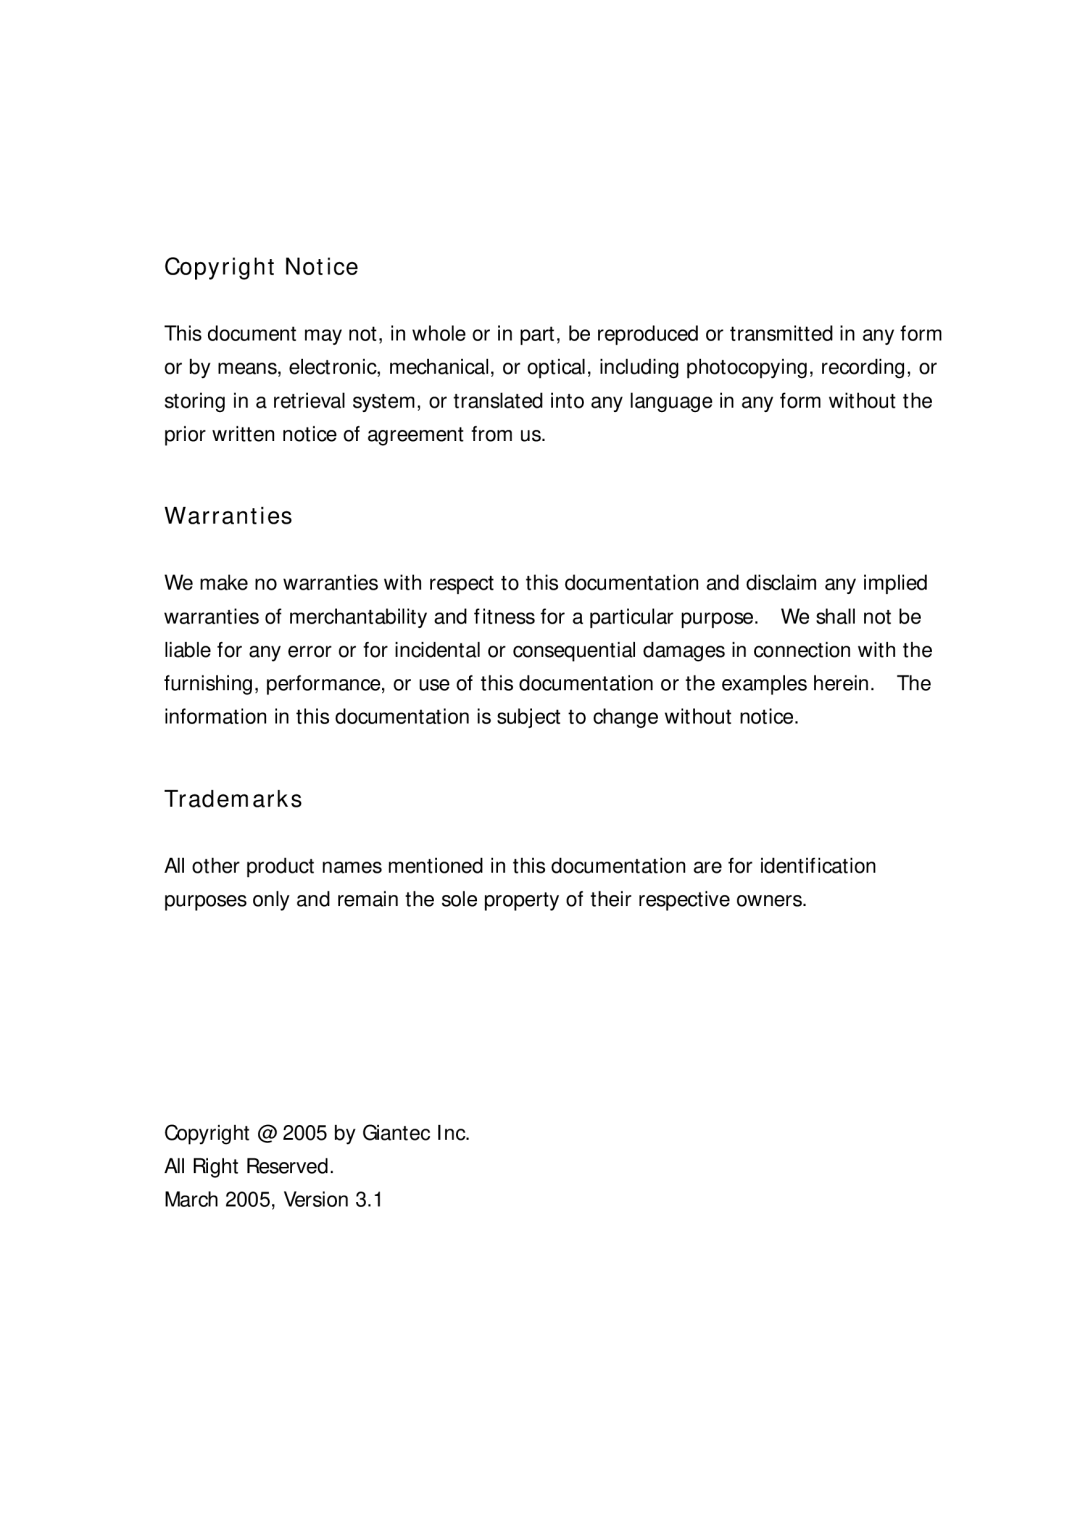 Giantec tracer2000 manual Copyright Notice, Warranties, Trademarks 